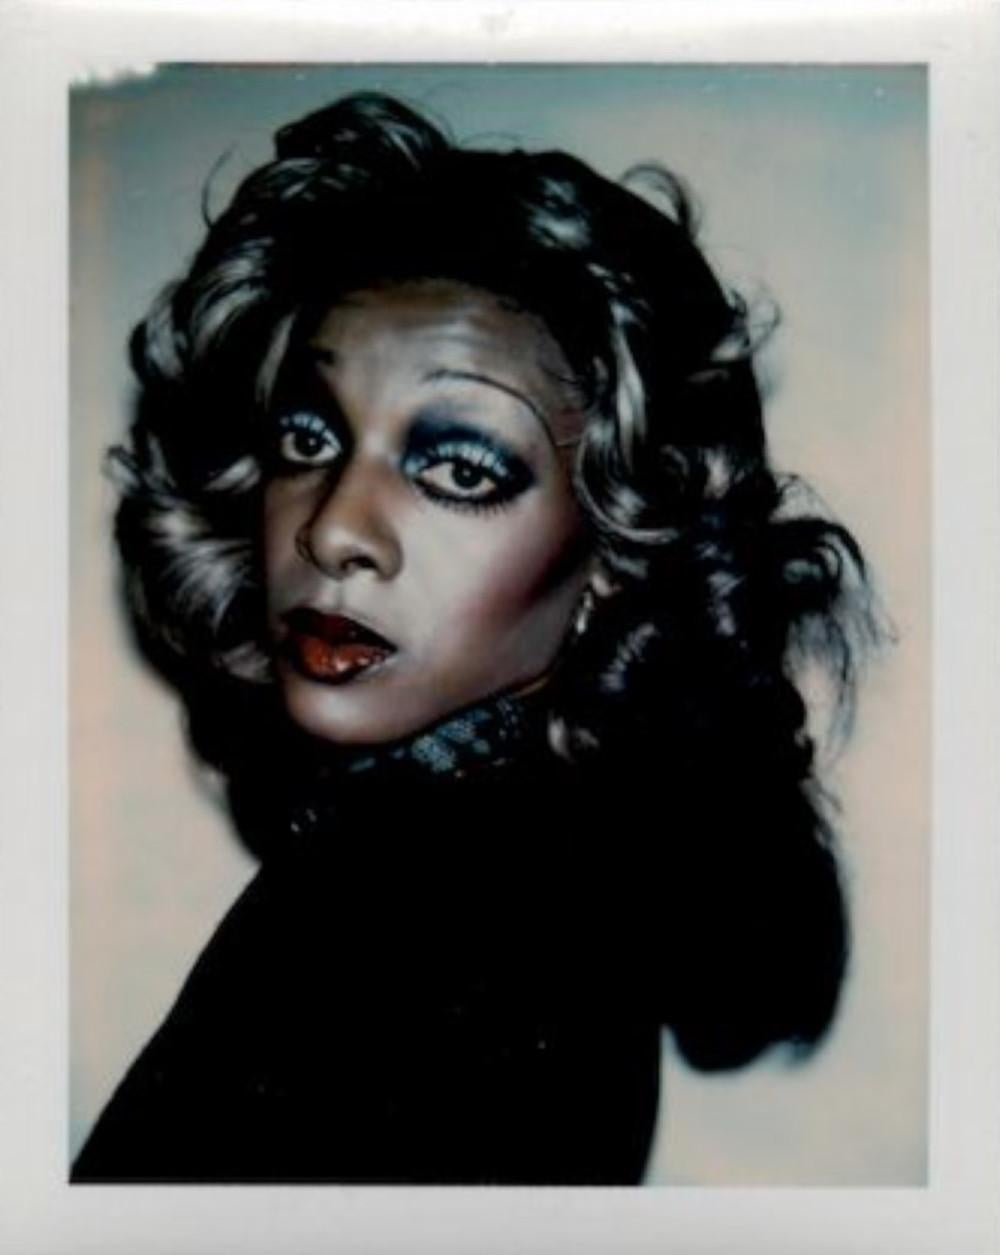 Andy Warhol Portrait Photograph - Ladies and Gentlemen (E.M.)